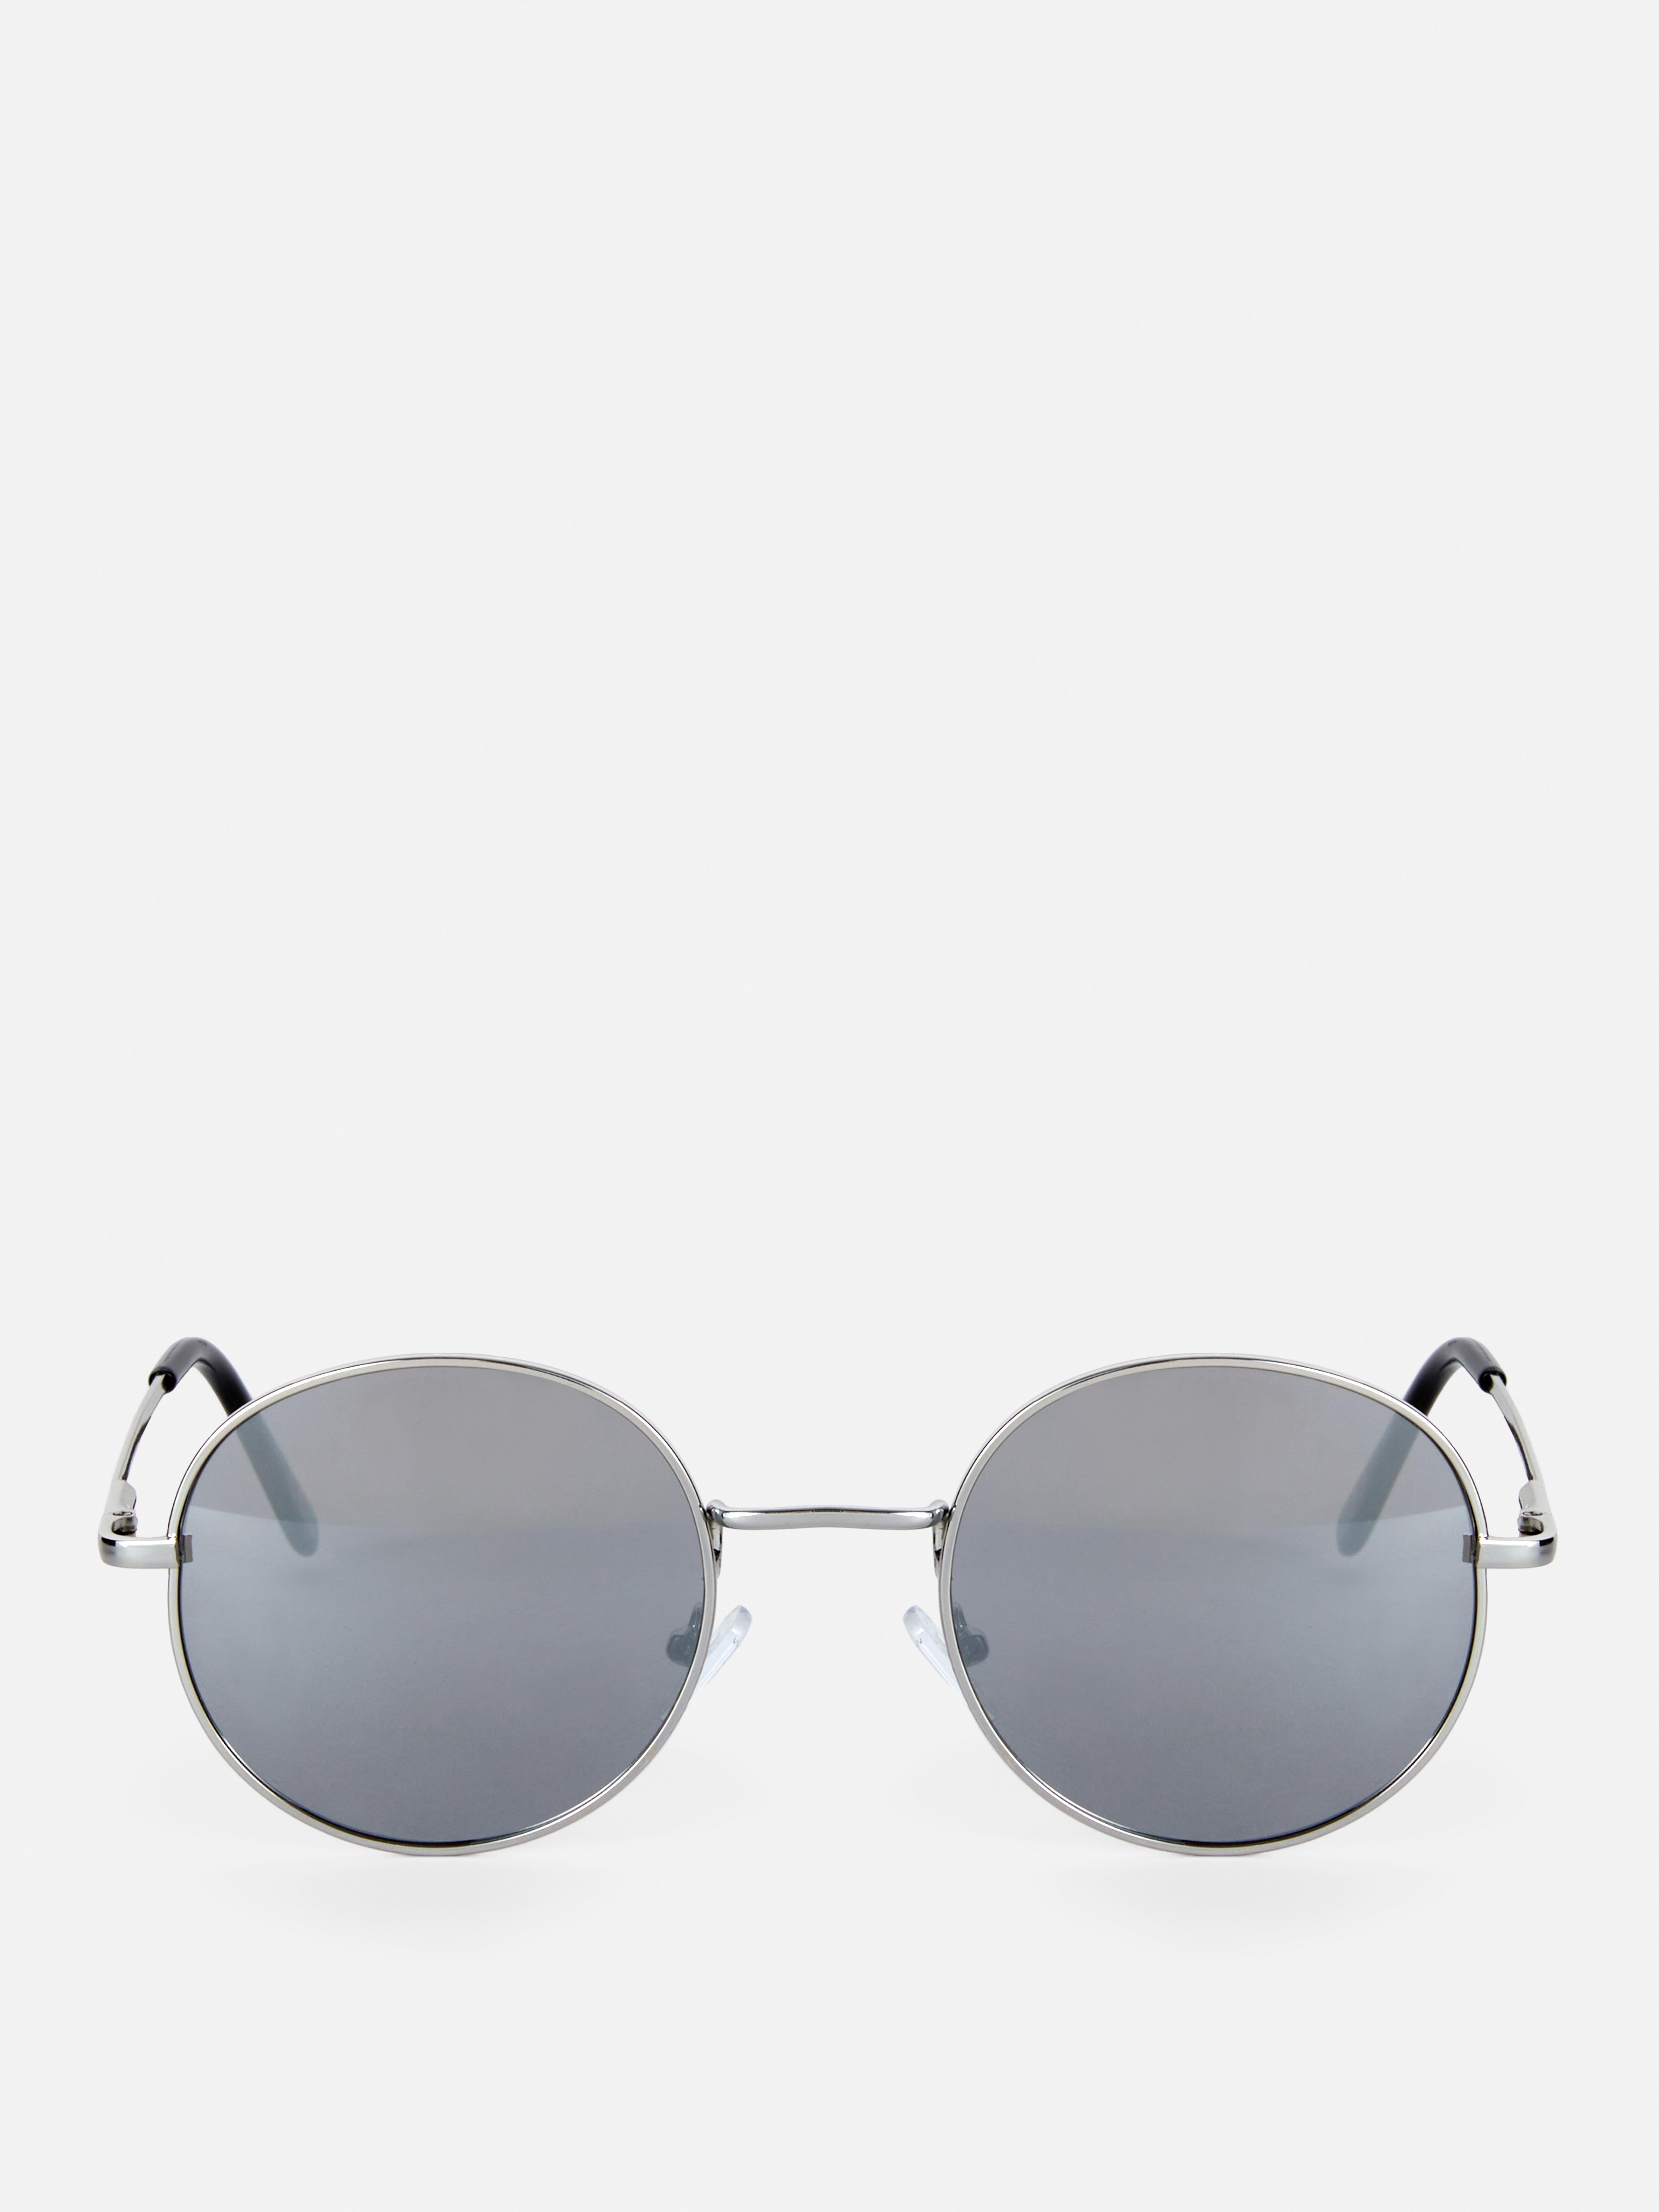 Metal Frame Round Vintage Sunglasses Silver